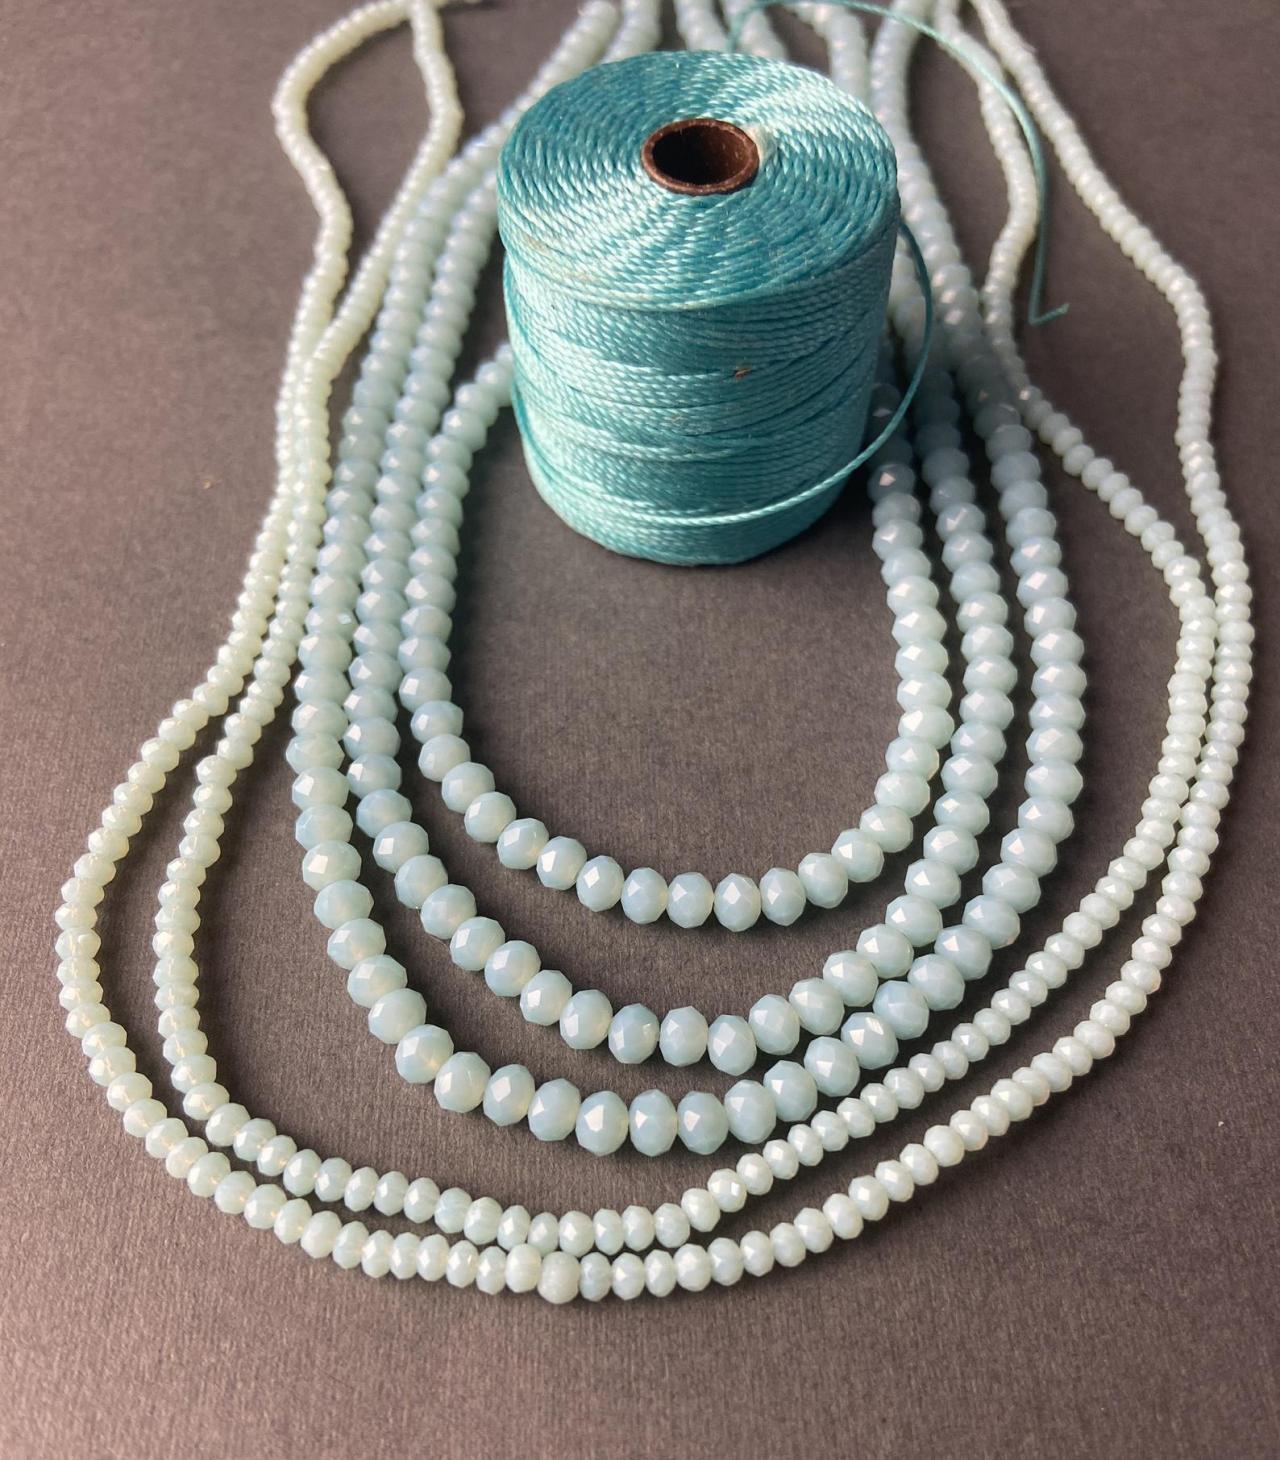 Lot of 5 Strands Turquoise Tiffany Robins Egg Blue Graduated Crystal Strand Bead Crochet Kit #25